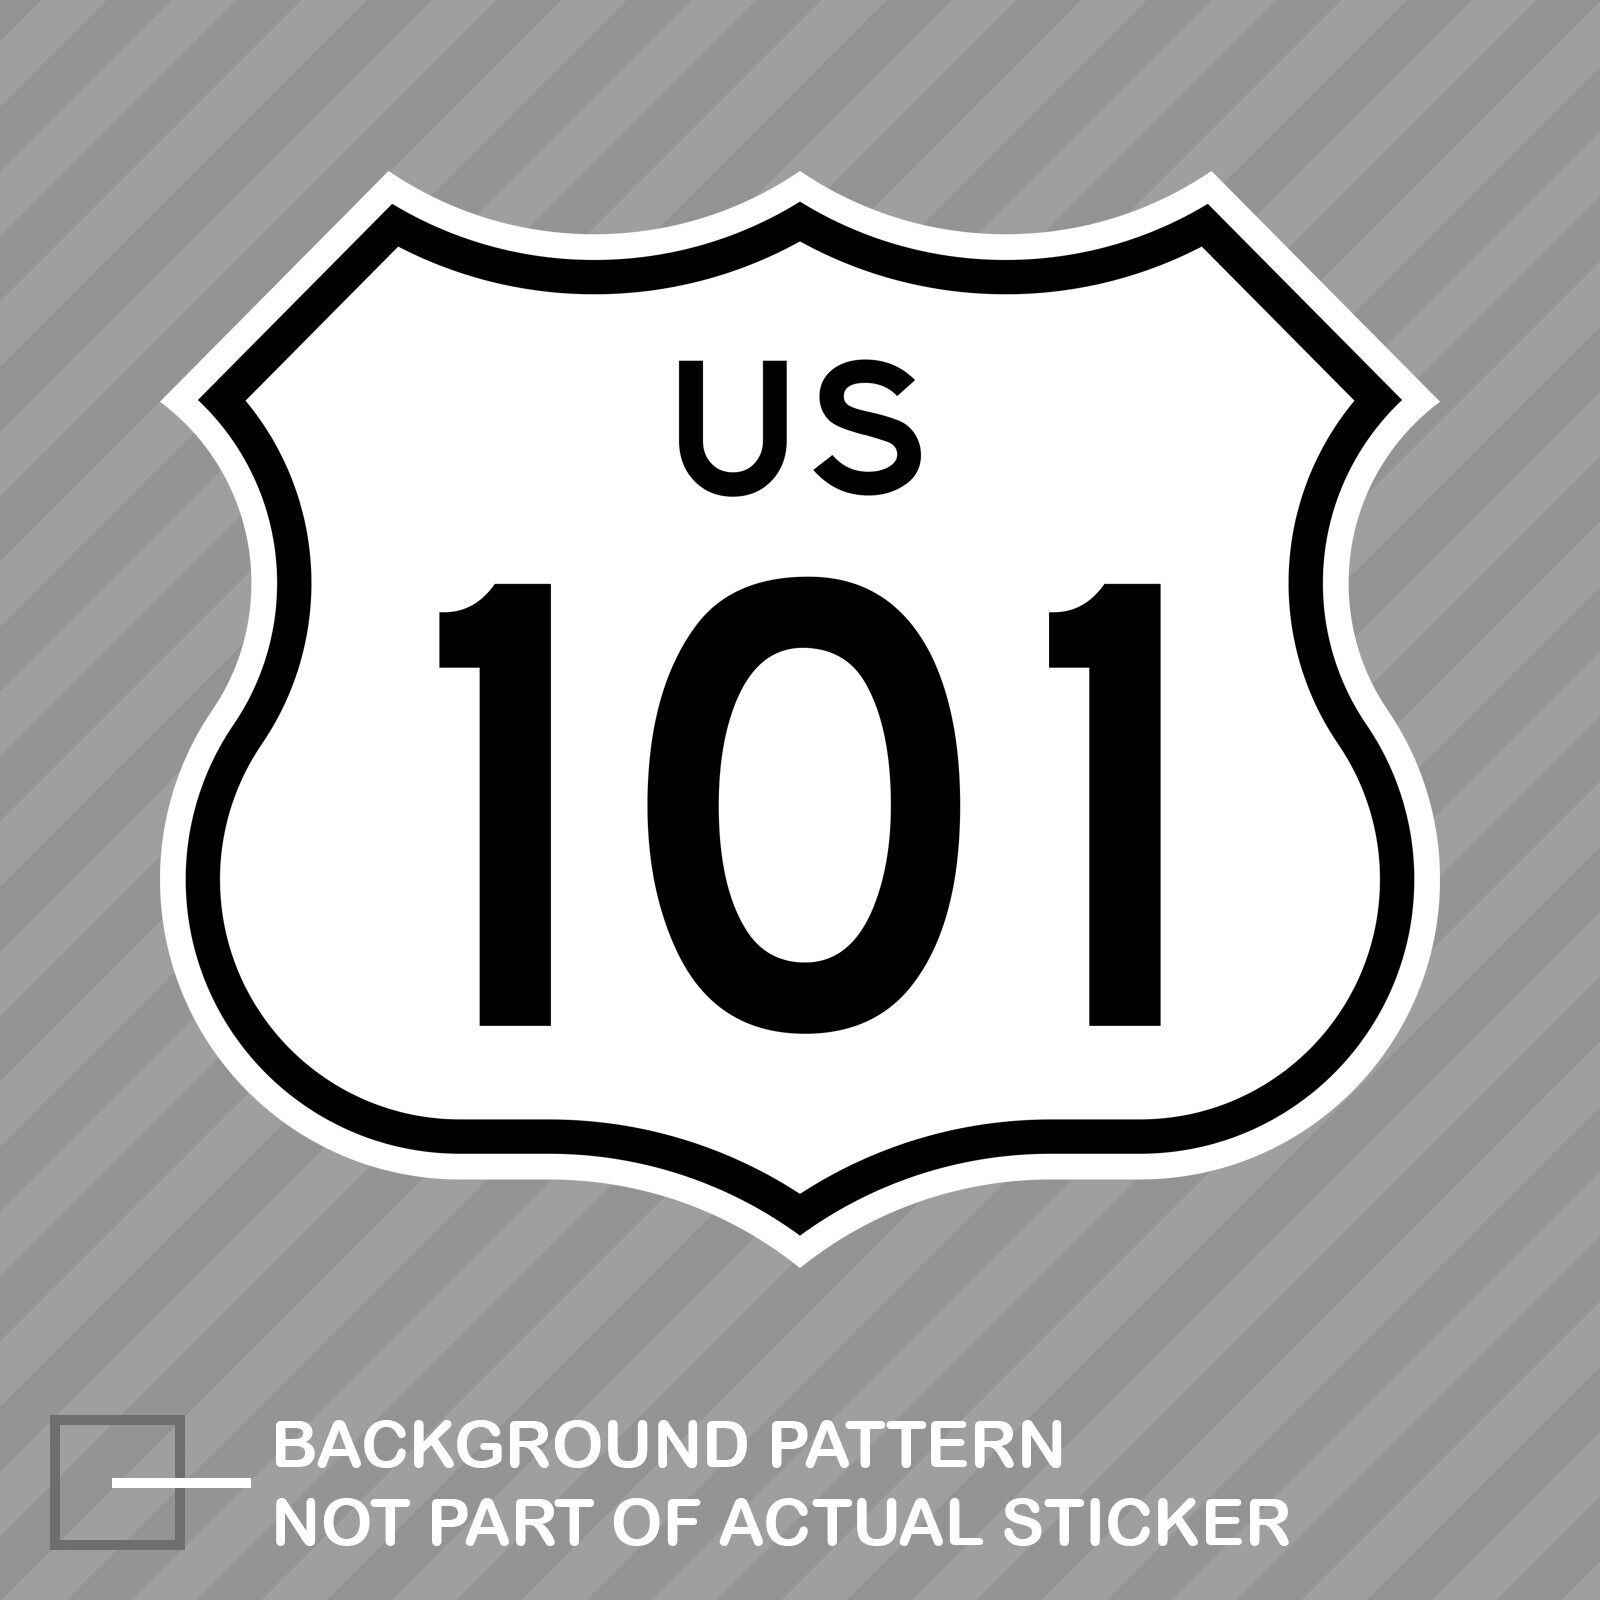 California Highway 101 Sign Sticker Decal Vinyl hwy 101 freeway shield